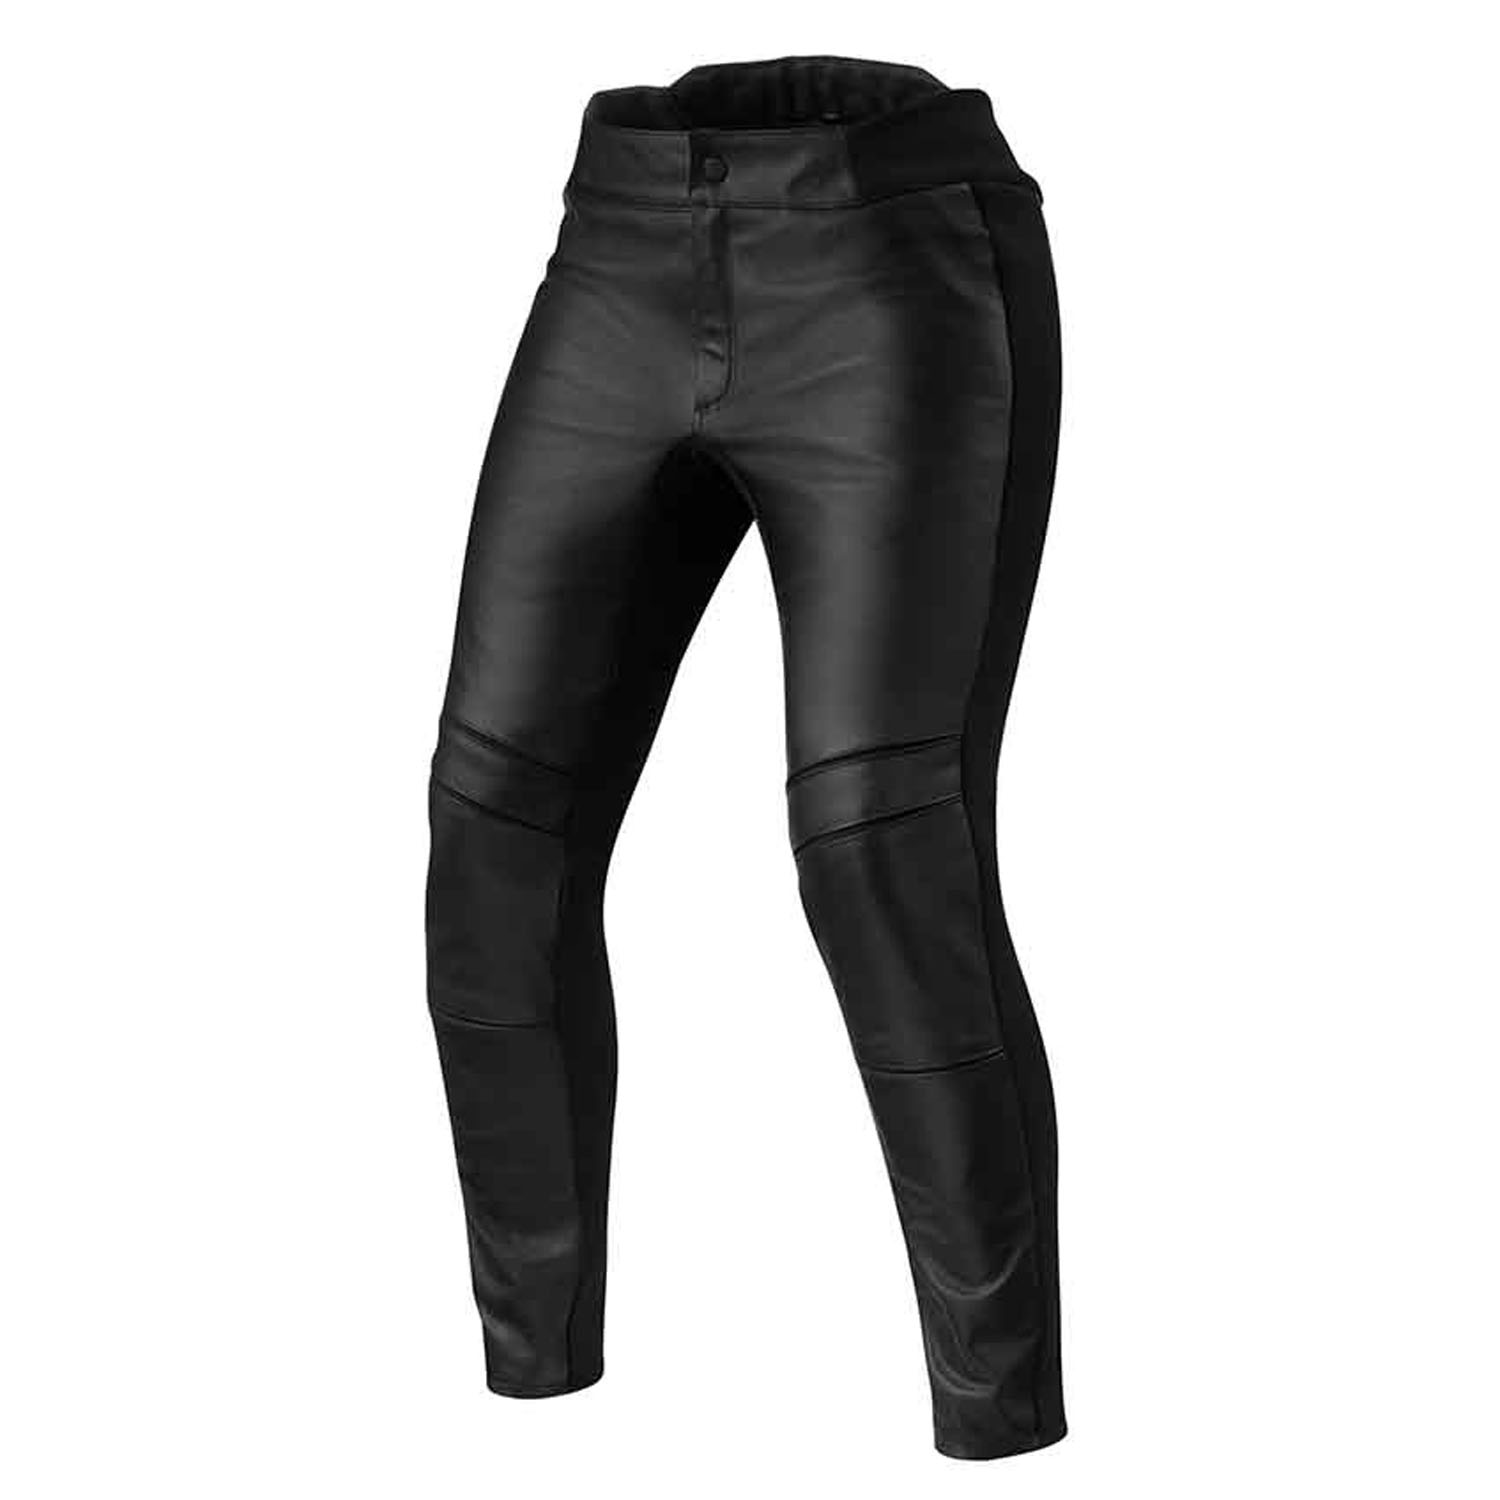 Image of REV'IT! Maci Ladies Black Long Motorcycle Pants Size 38 ID 8700001359191